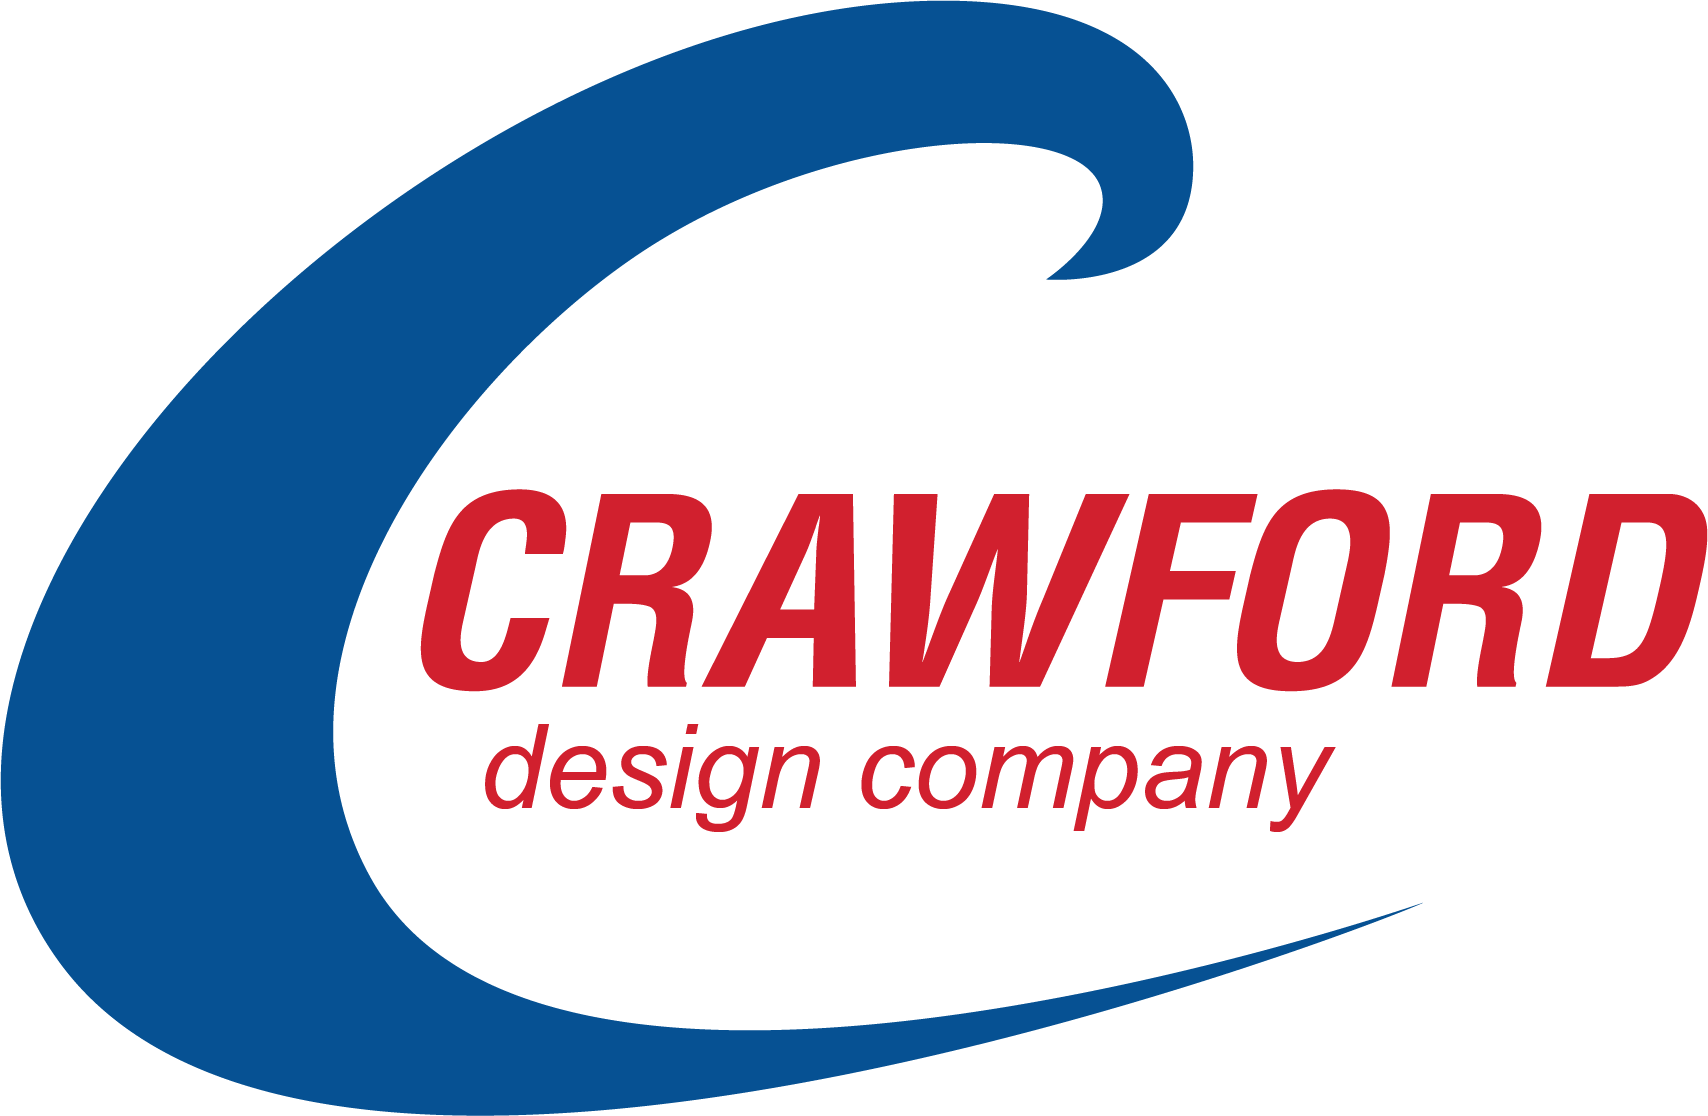 Crawford design company